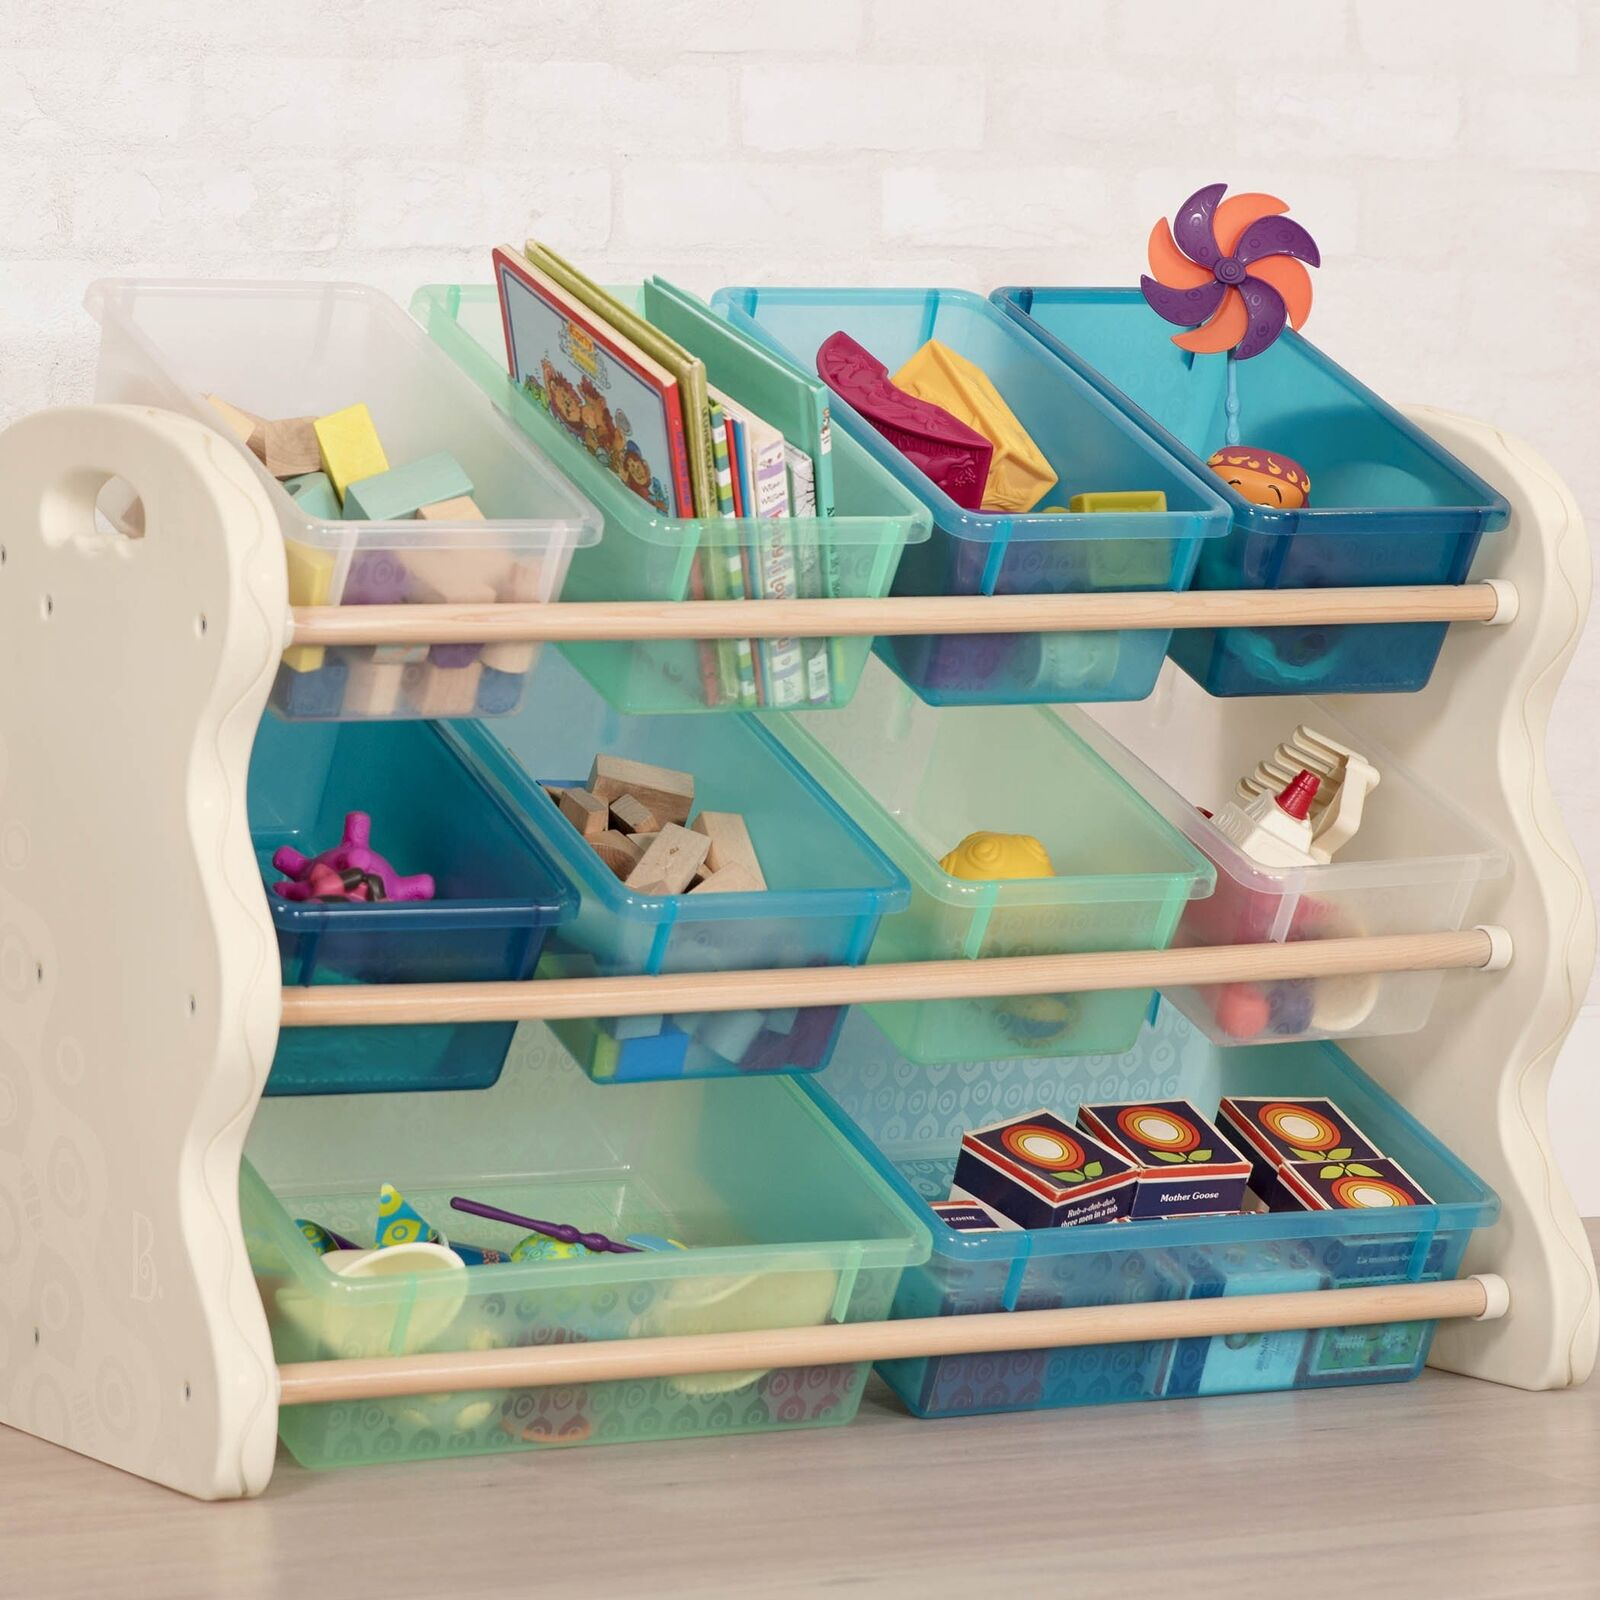 B Spaces Battat Totes Tidy Toy Organizer Kids Furniture Set with regard to sizing 1600 X 1600